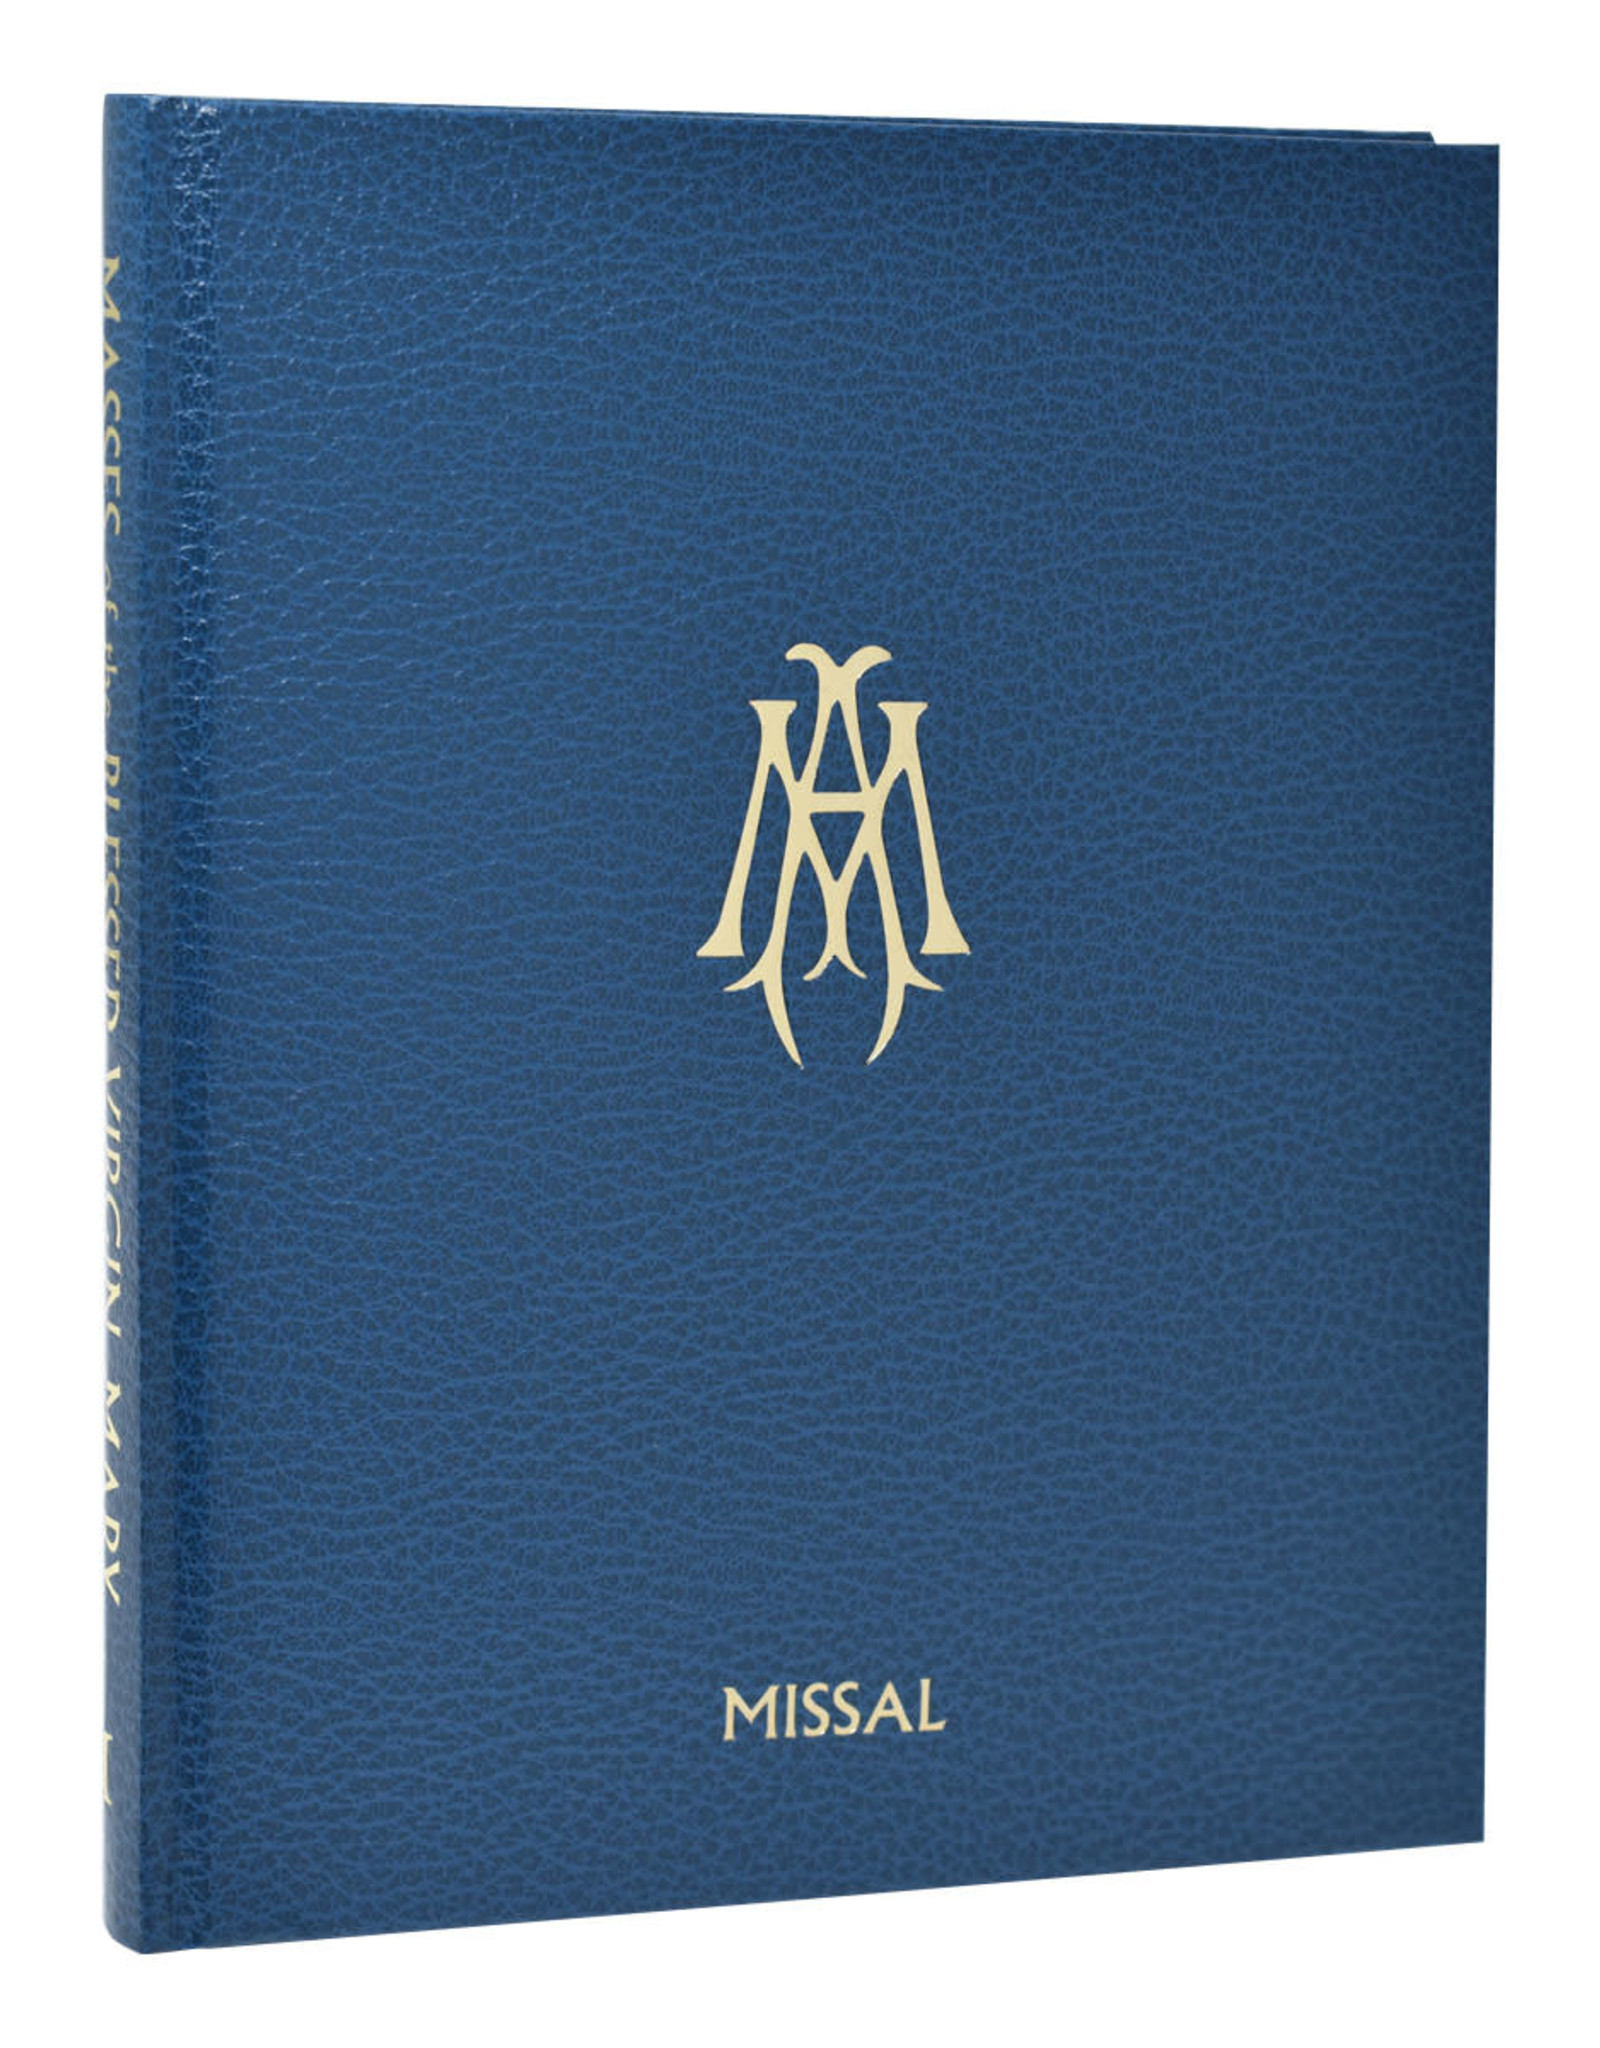 Catholic Book Publishing Collection of Masses of B.V.M. Vol. 1 Missal